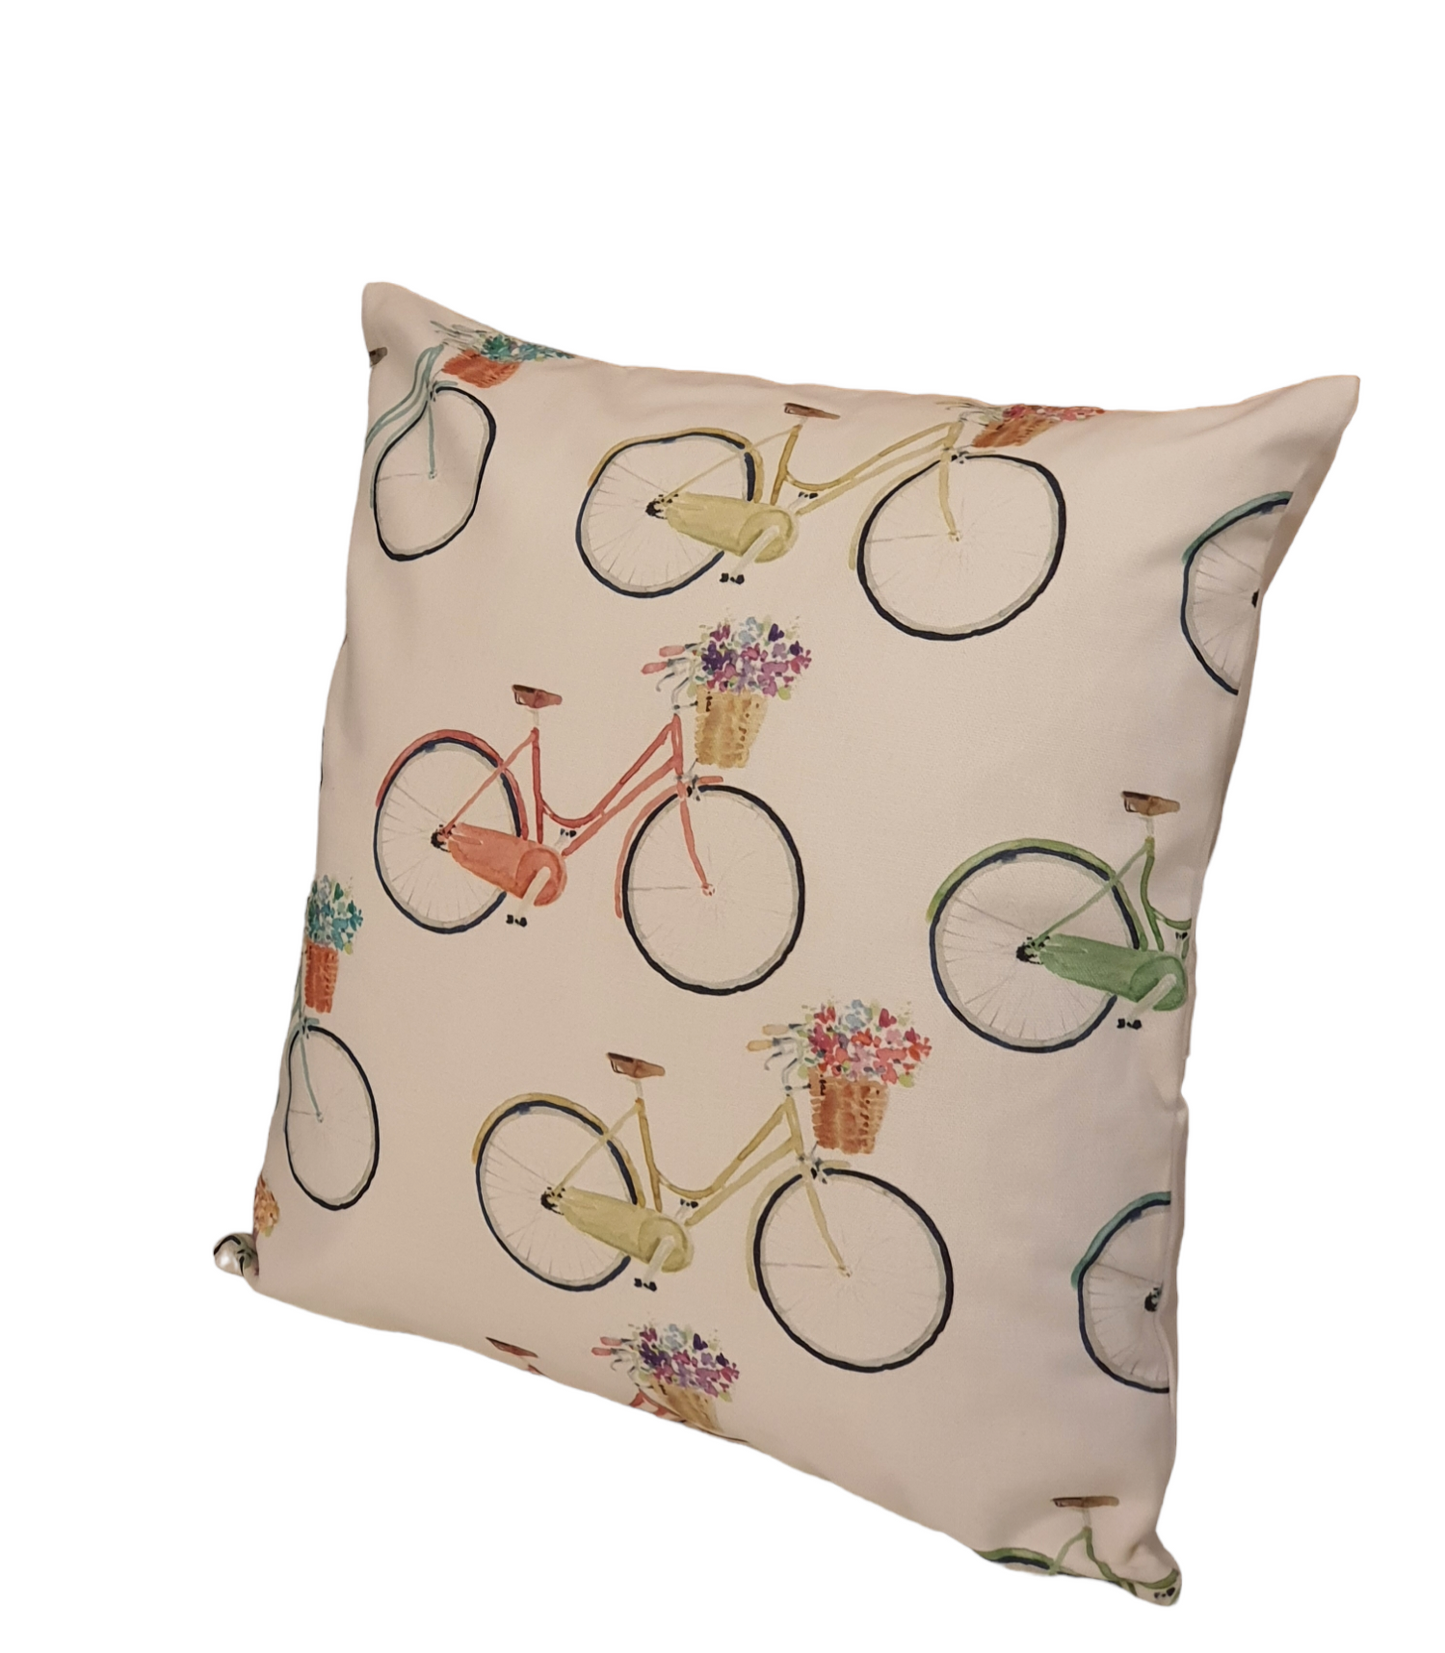 Cream Cycles Fabric - Handmade Cushion Cover (17x17)